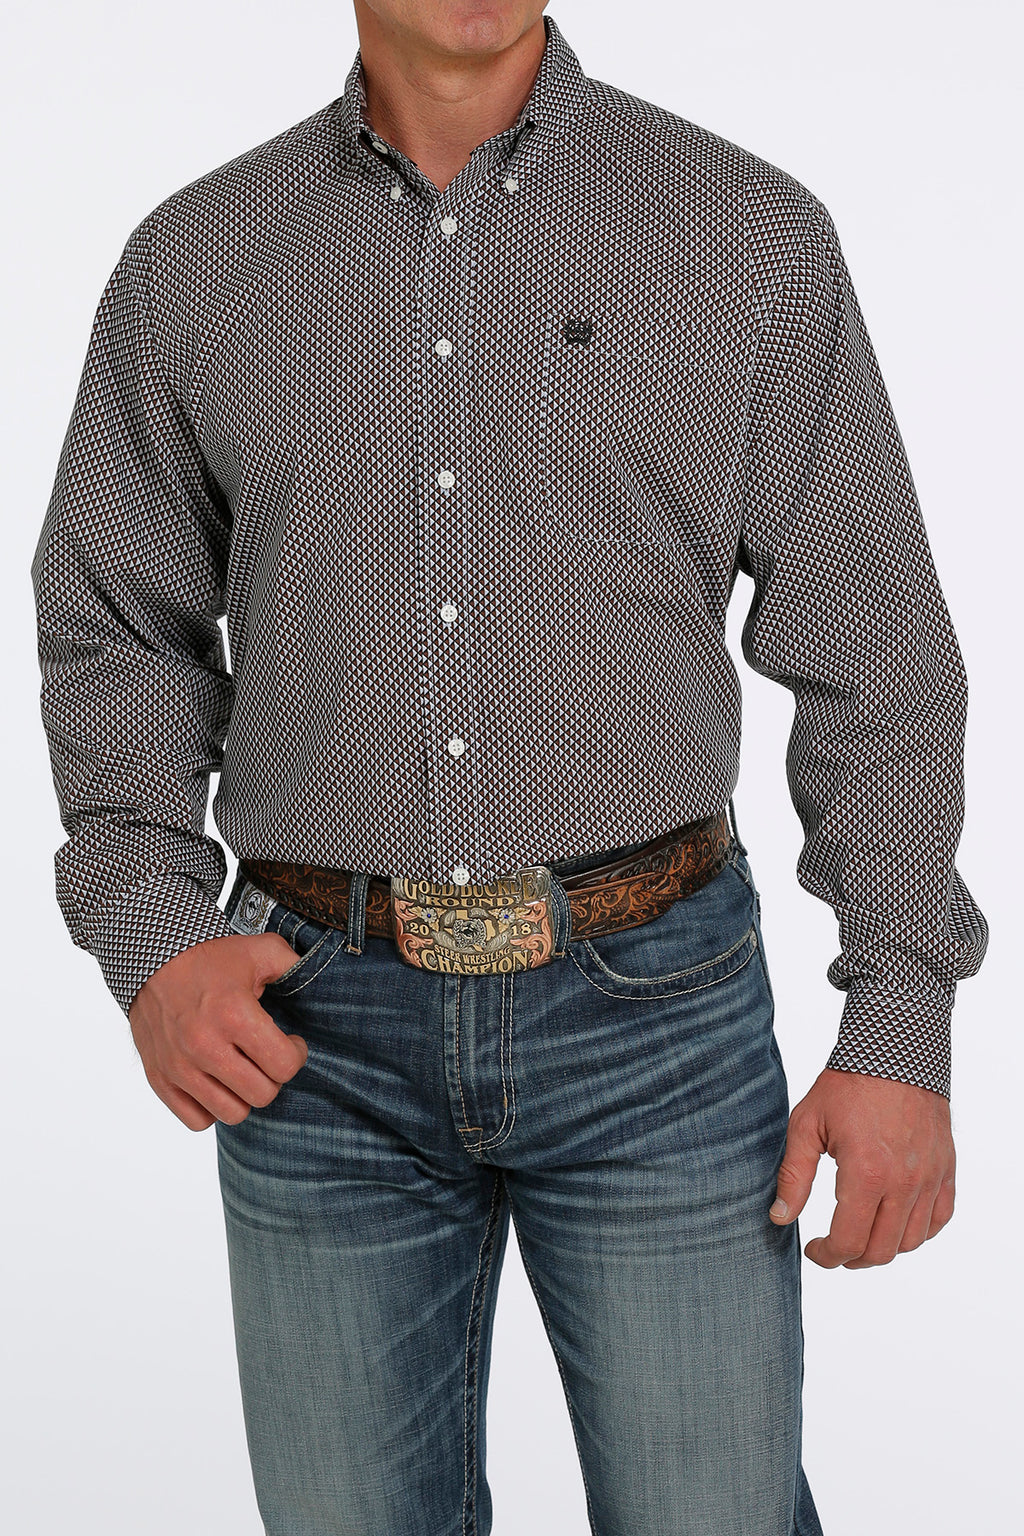 CINCH Men's Button-Down Western Shirt